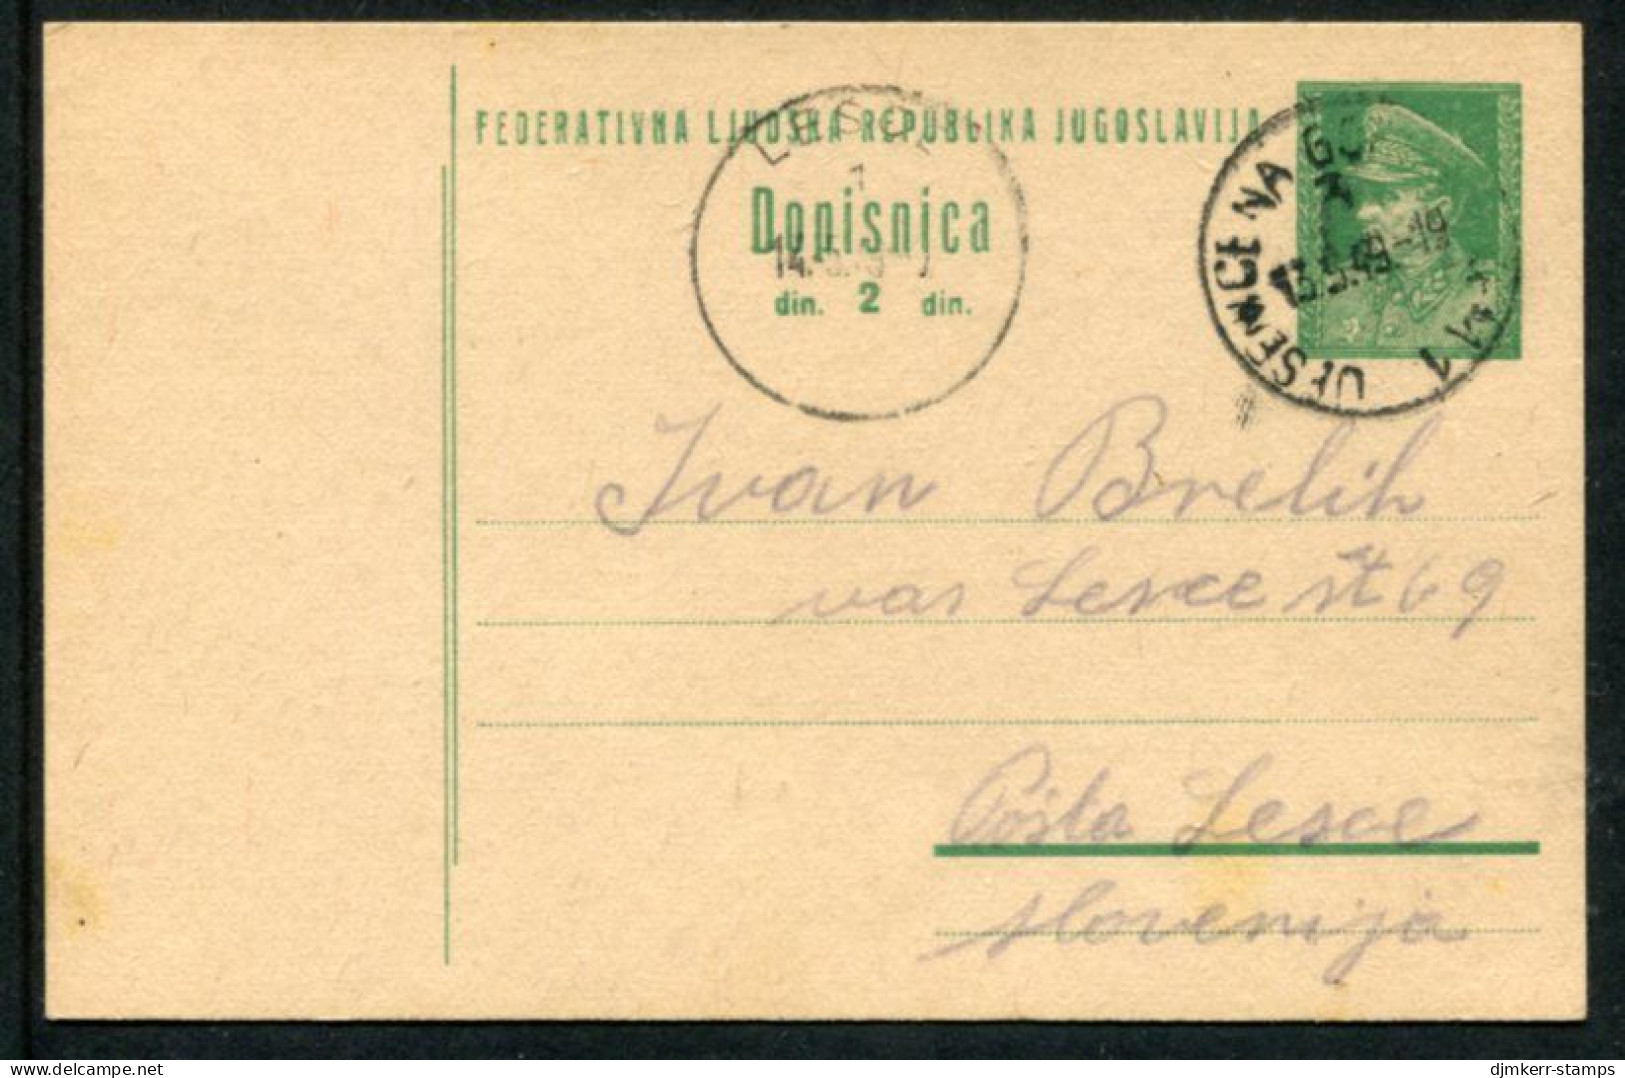 YUGOSLAVIA 1948 Tito 2 (d) Postal Stationery Card  With Text In Slovene, Used.  Michel P126 - Interi Postali